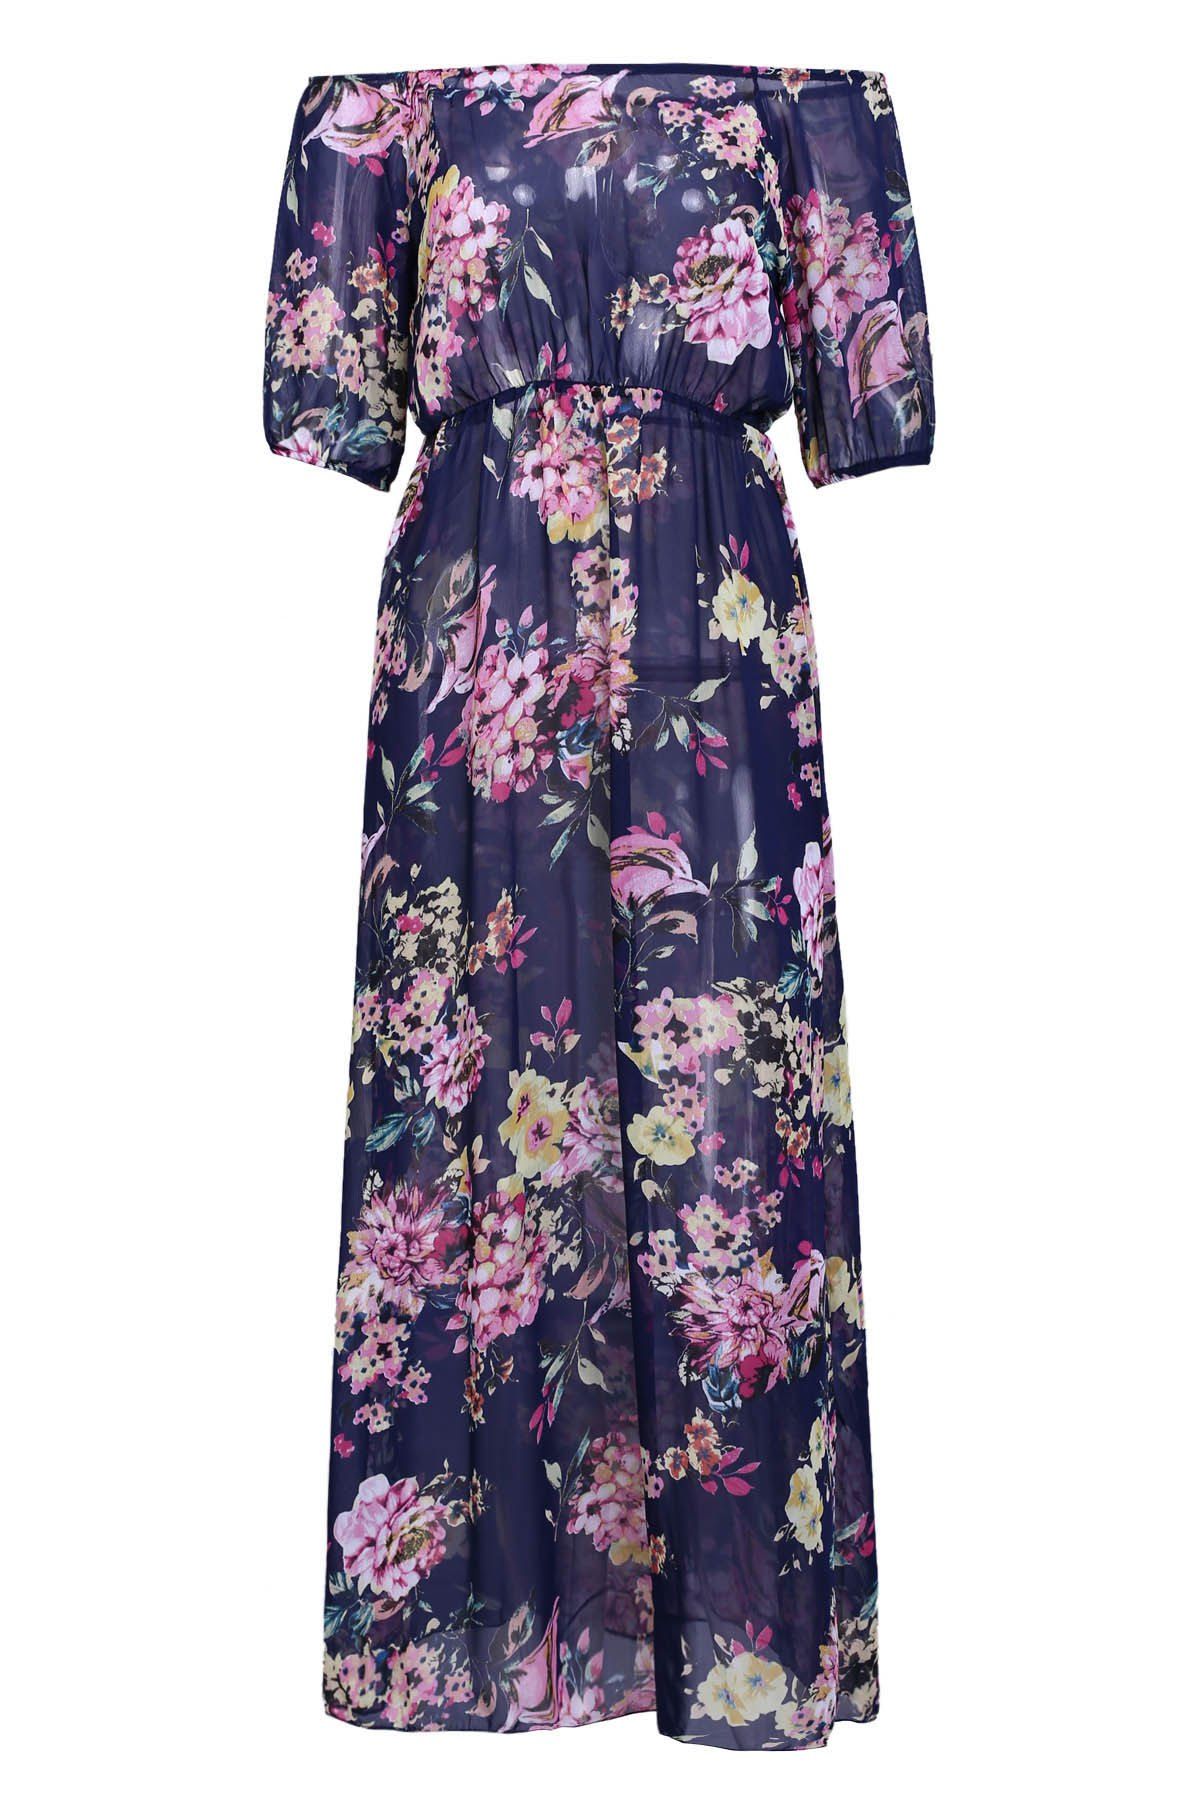 [76% OFF] Maxi Floral Print See-Through Dress | Rosegal